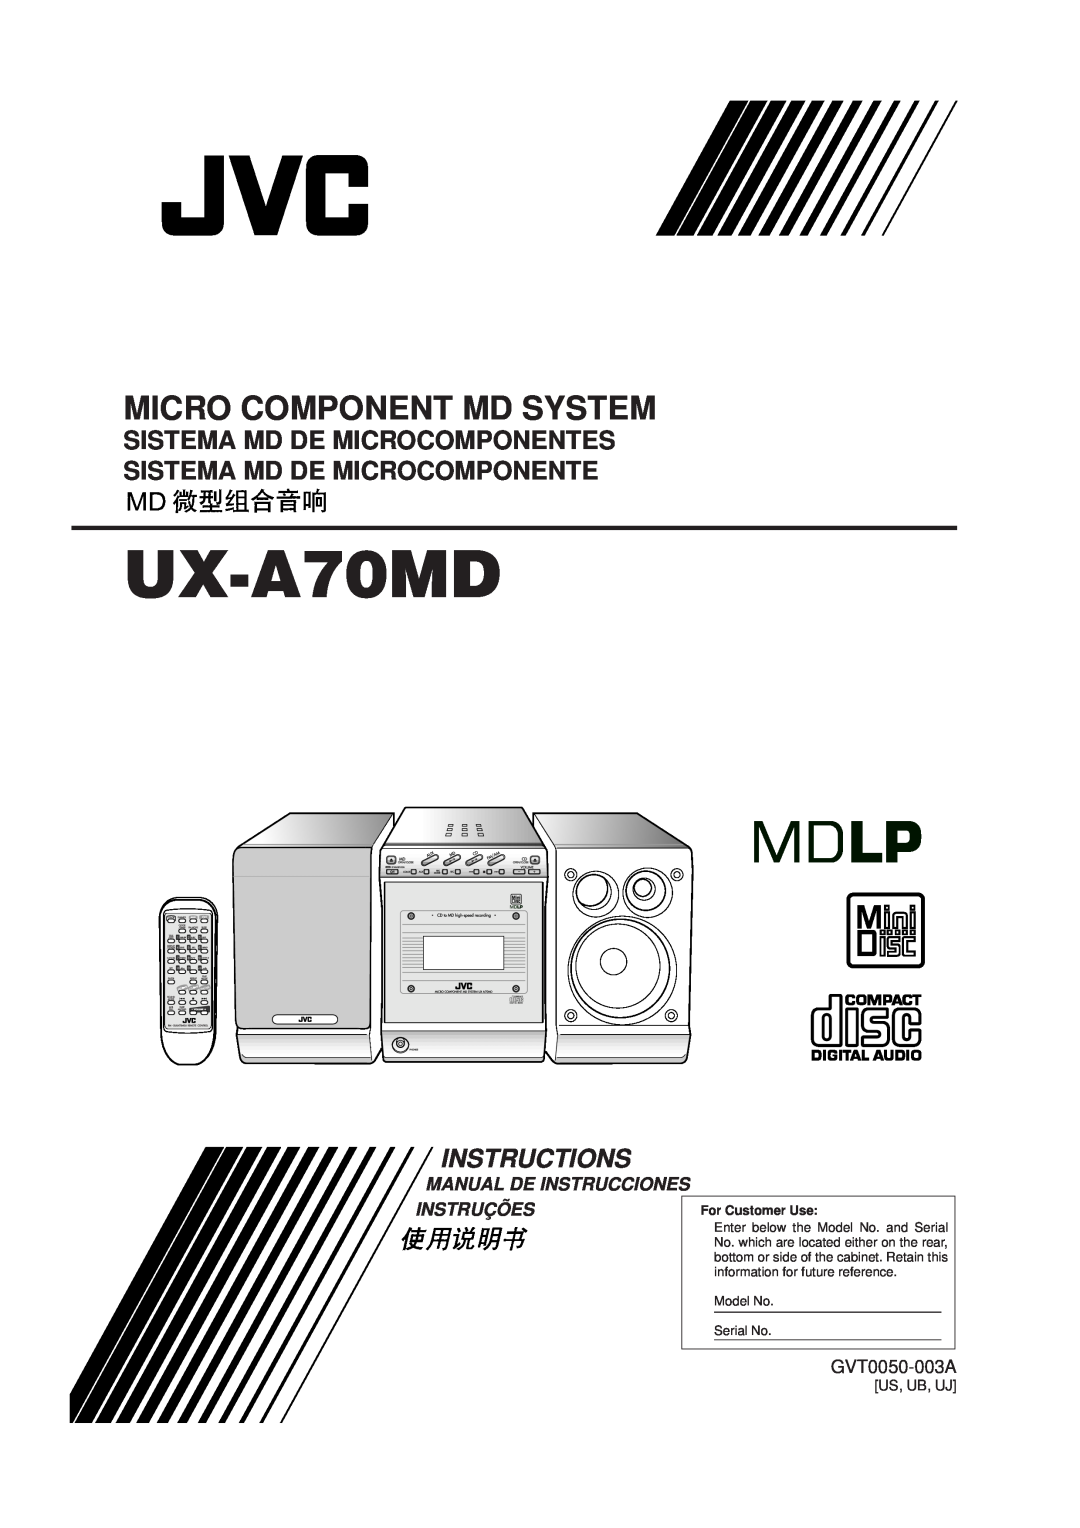 JVC UX-A70MD manual Sistema Md De Microcomponentes, GVT0050-003A, Micro Component Md System, Instructions, Instruções 